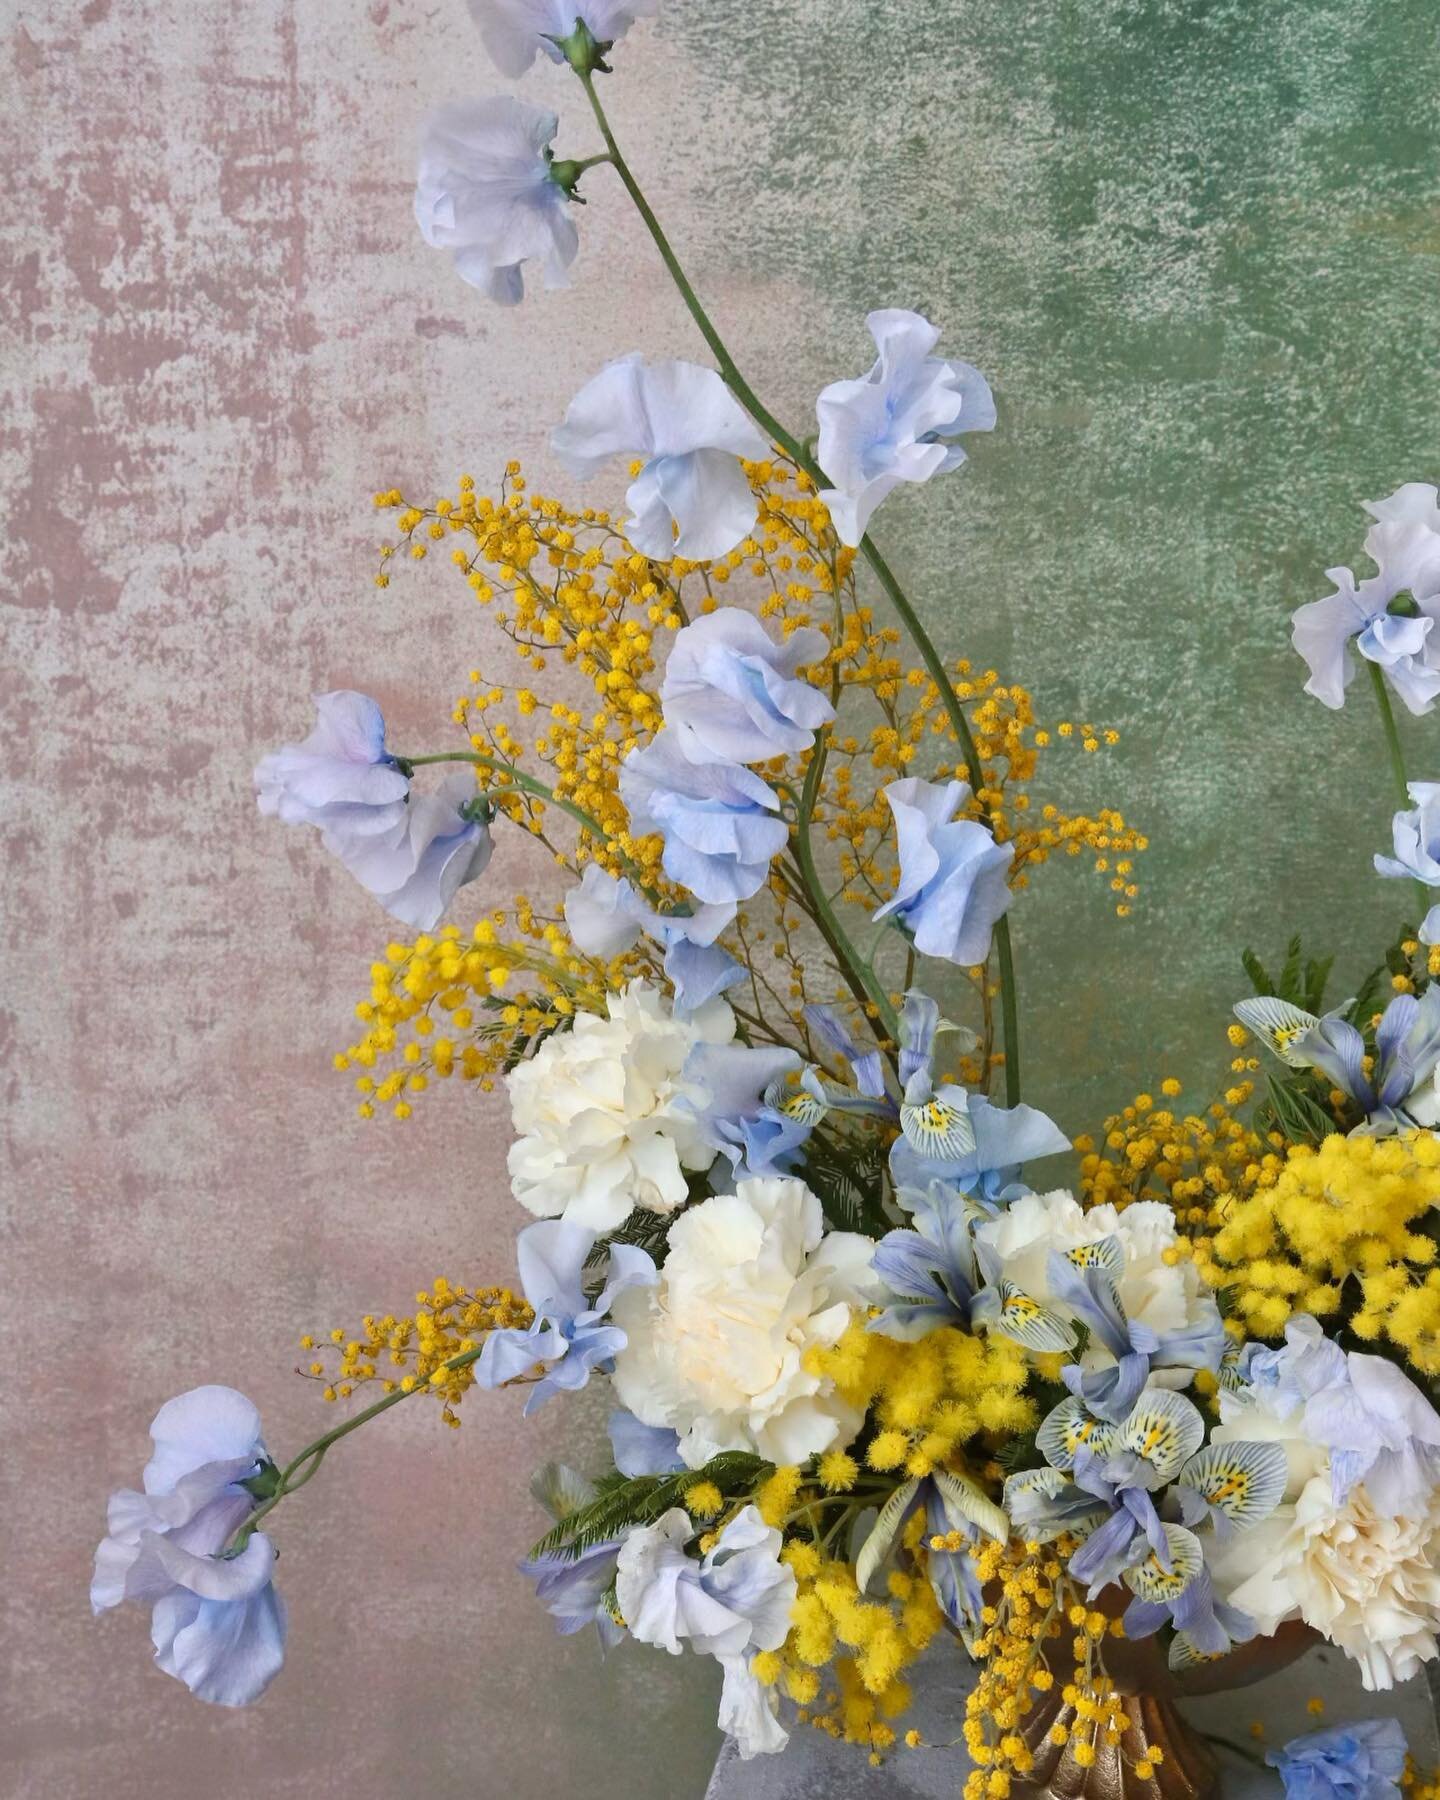 Japanese Sweet Pea x Mini irises 💙💛 a very spring combination.

Vessel @accentdecorinc 
Flowers @thefloralreserve 

#underthefloralspell #accentdecor #myaccentdecor #springflowers🌸 #floristik #floristy #weddingmoodboard